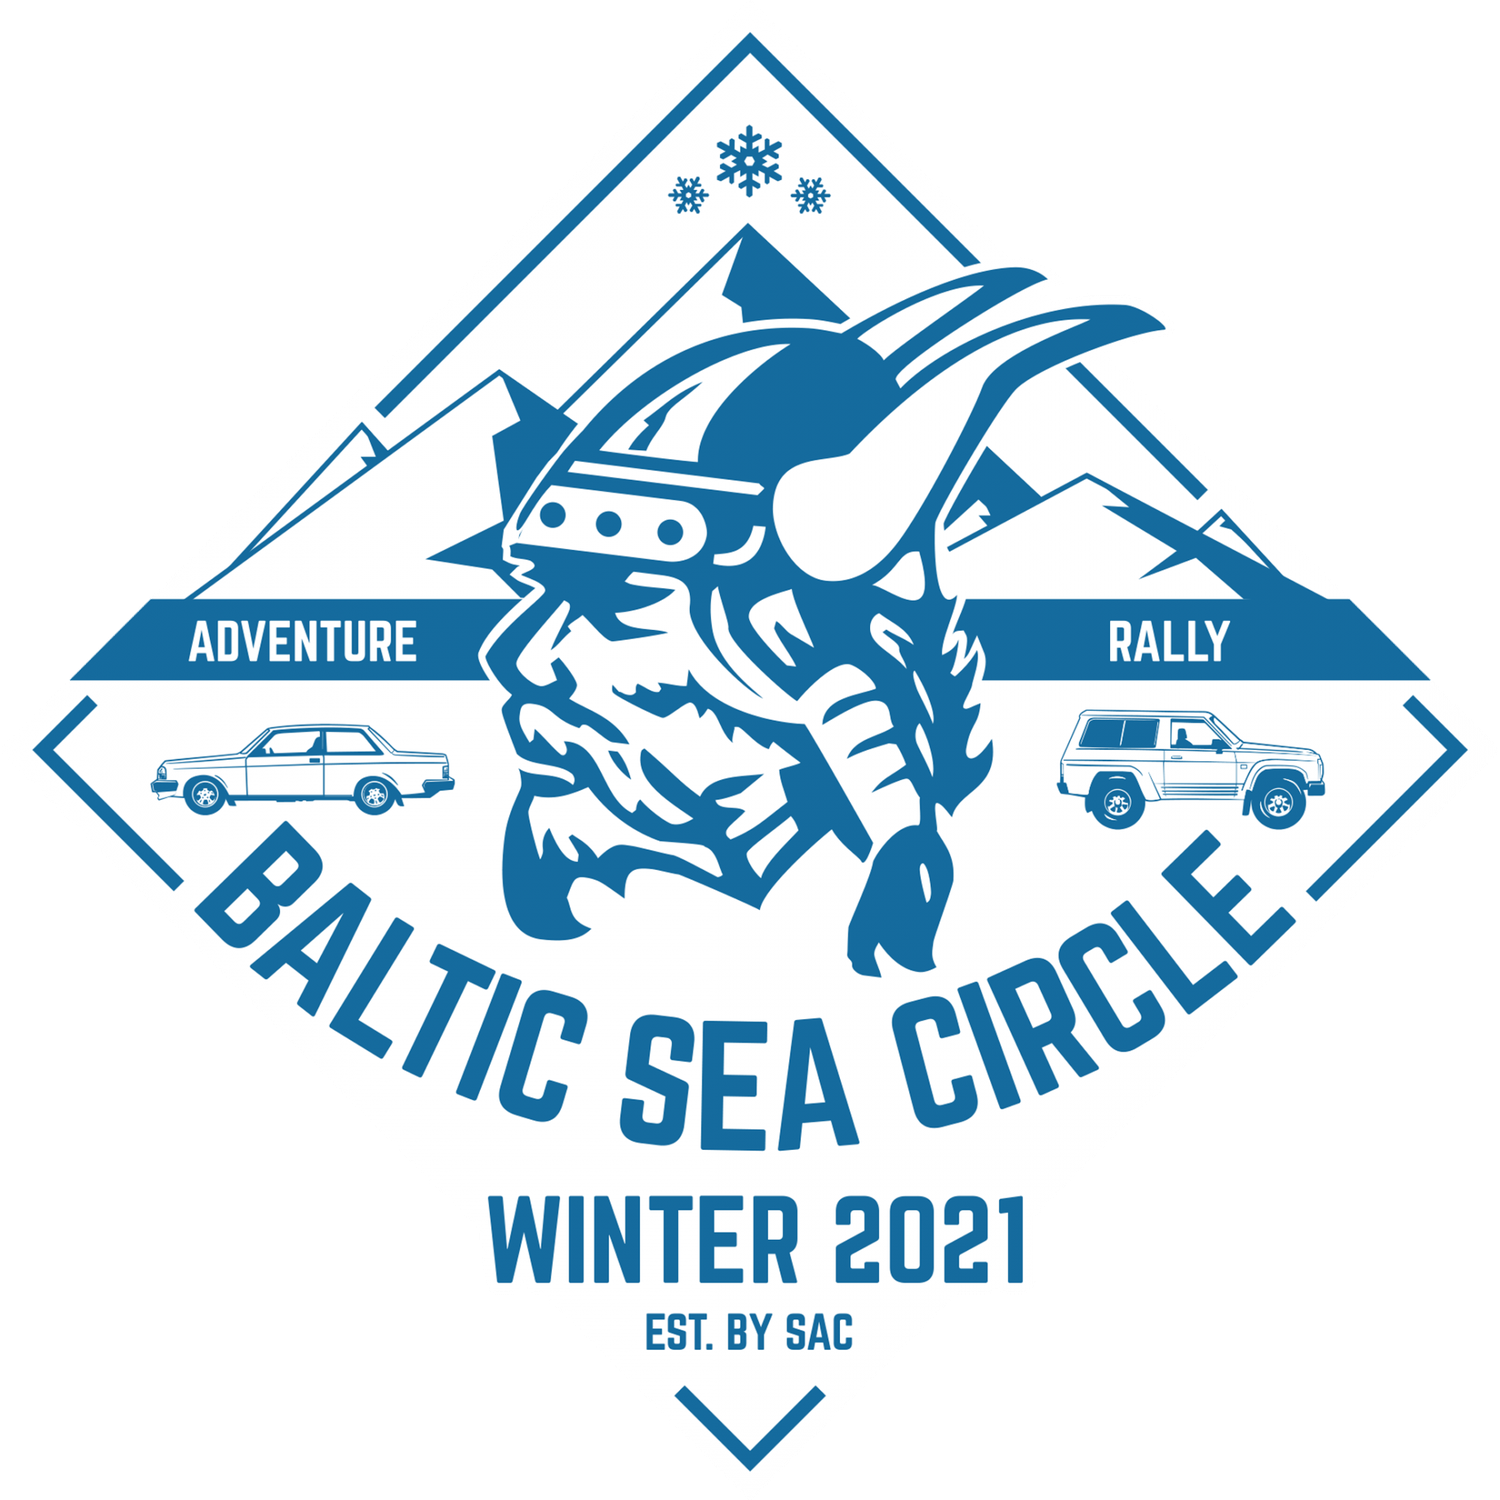 Anmeldung Baltic Sea Circle